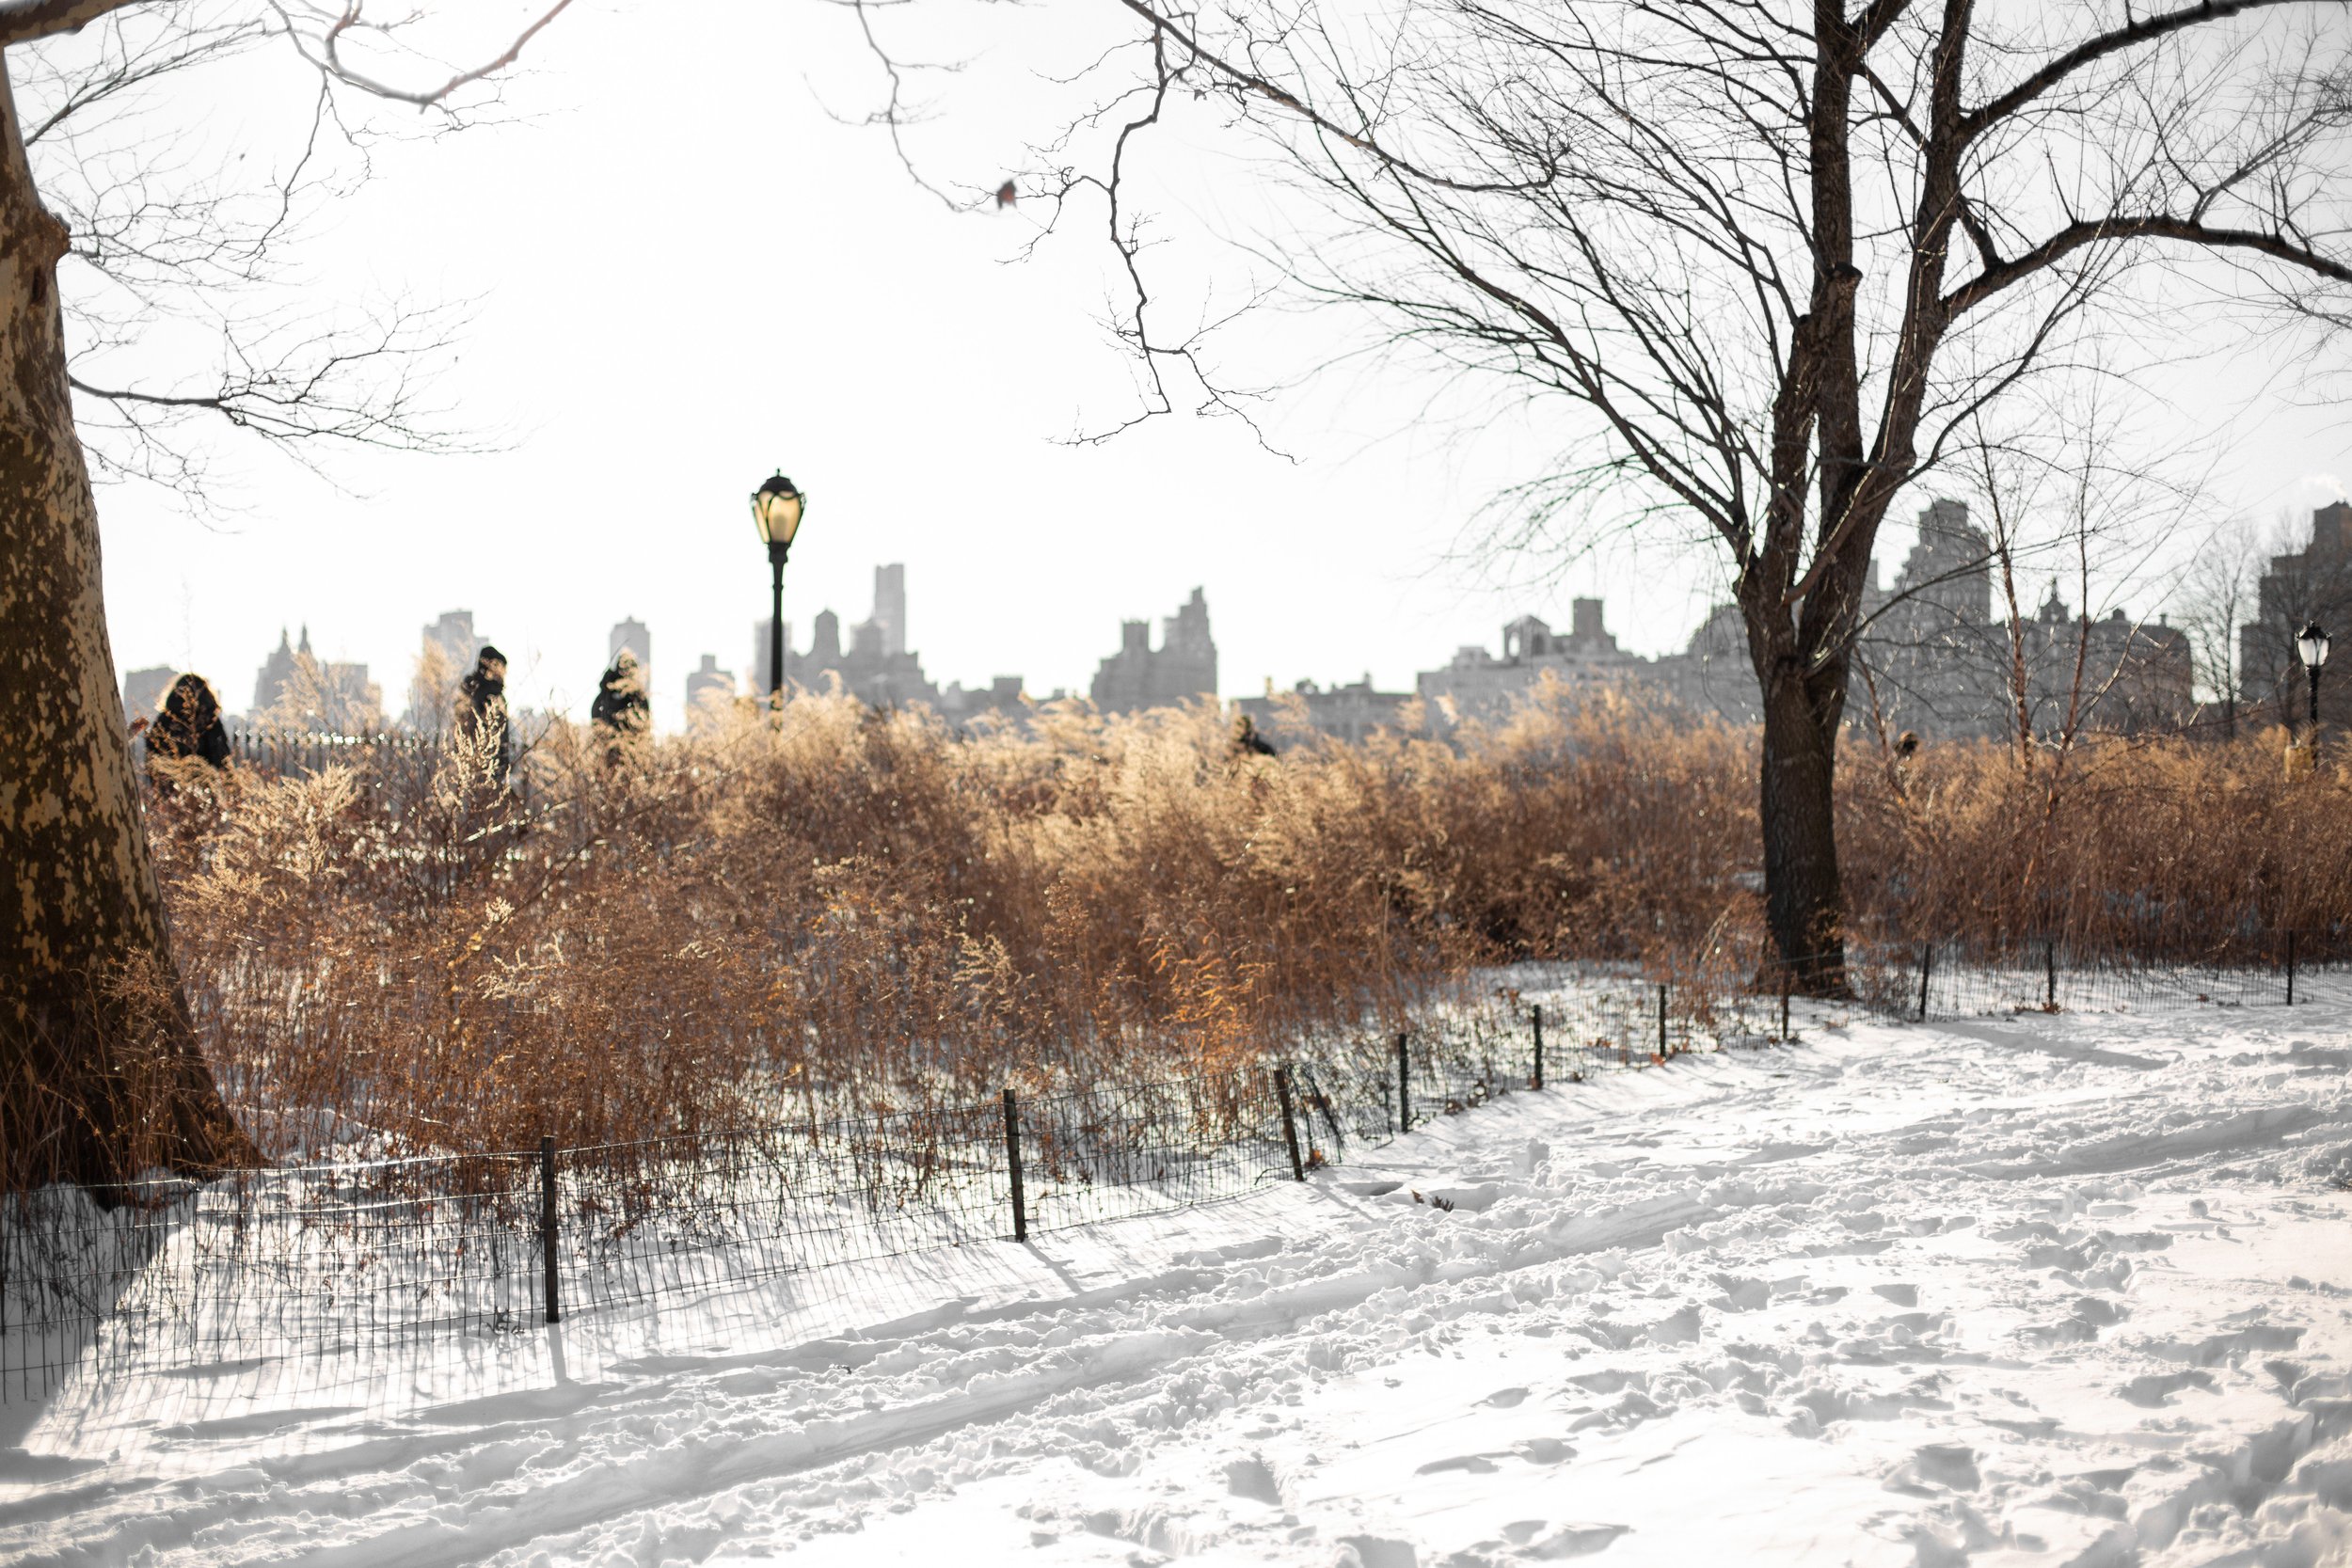 A snowy reservoir at Central Park